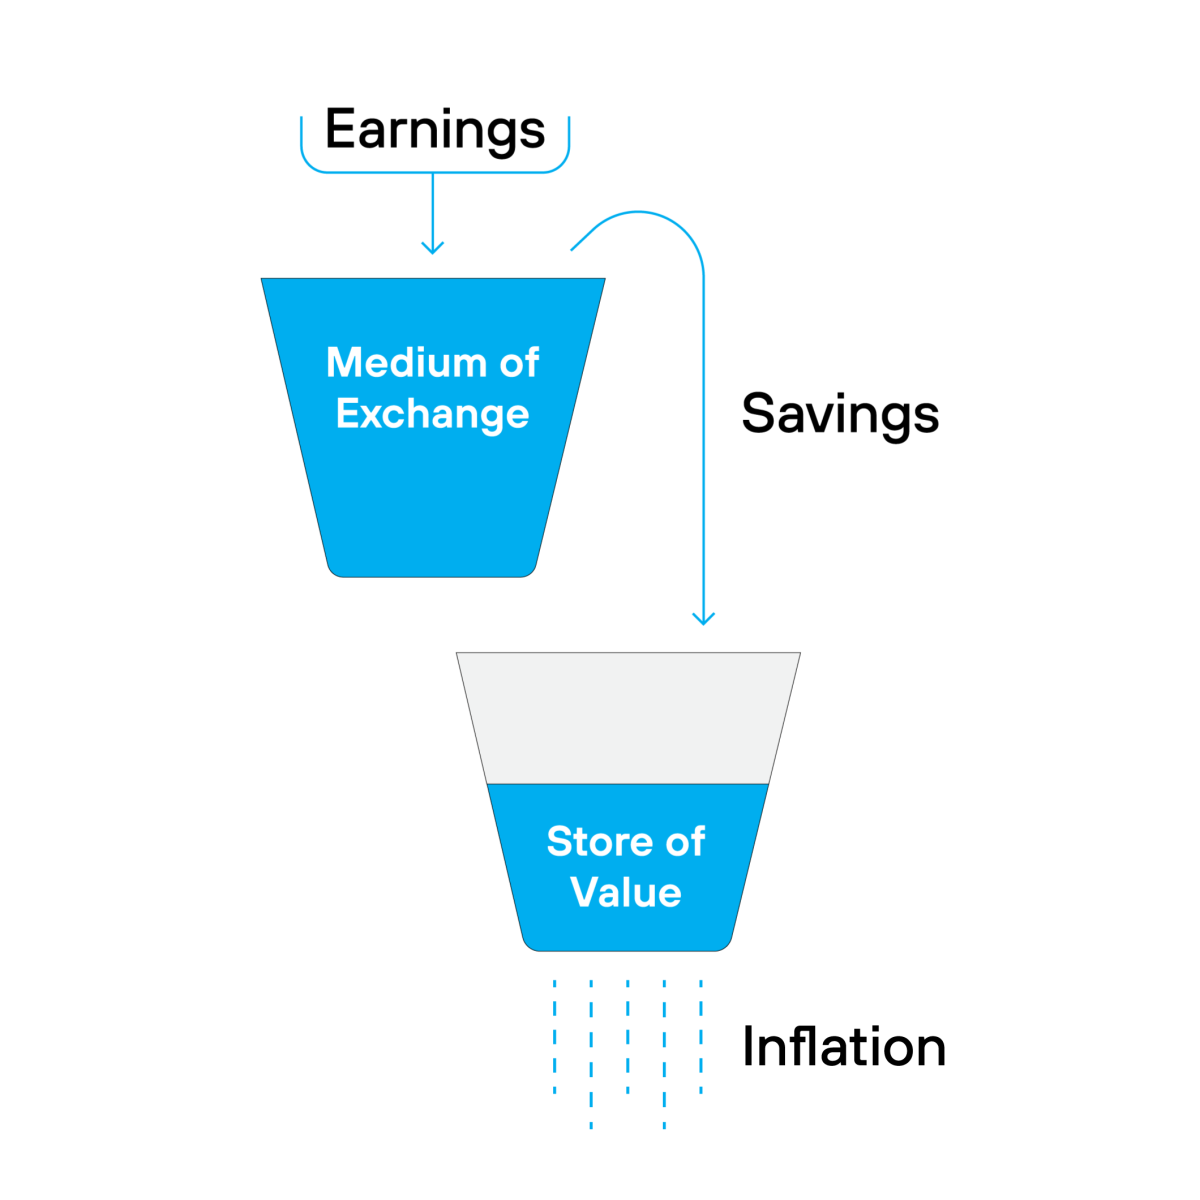 earnings and savings buckets